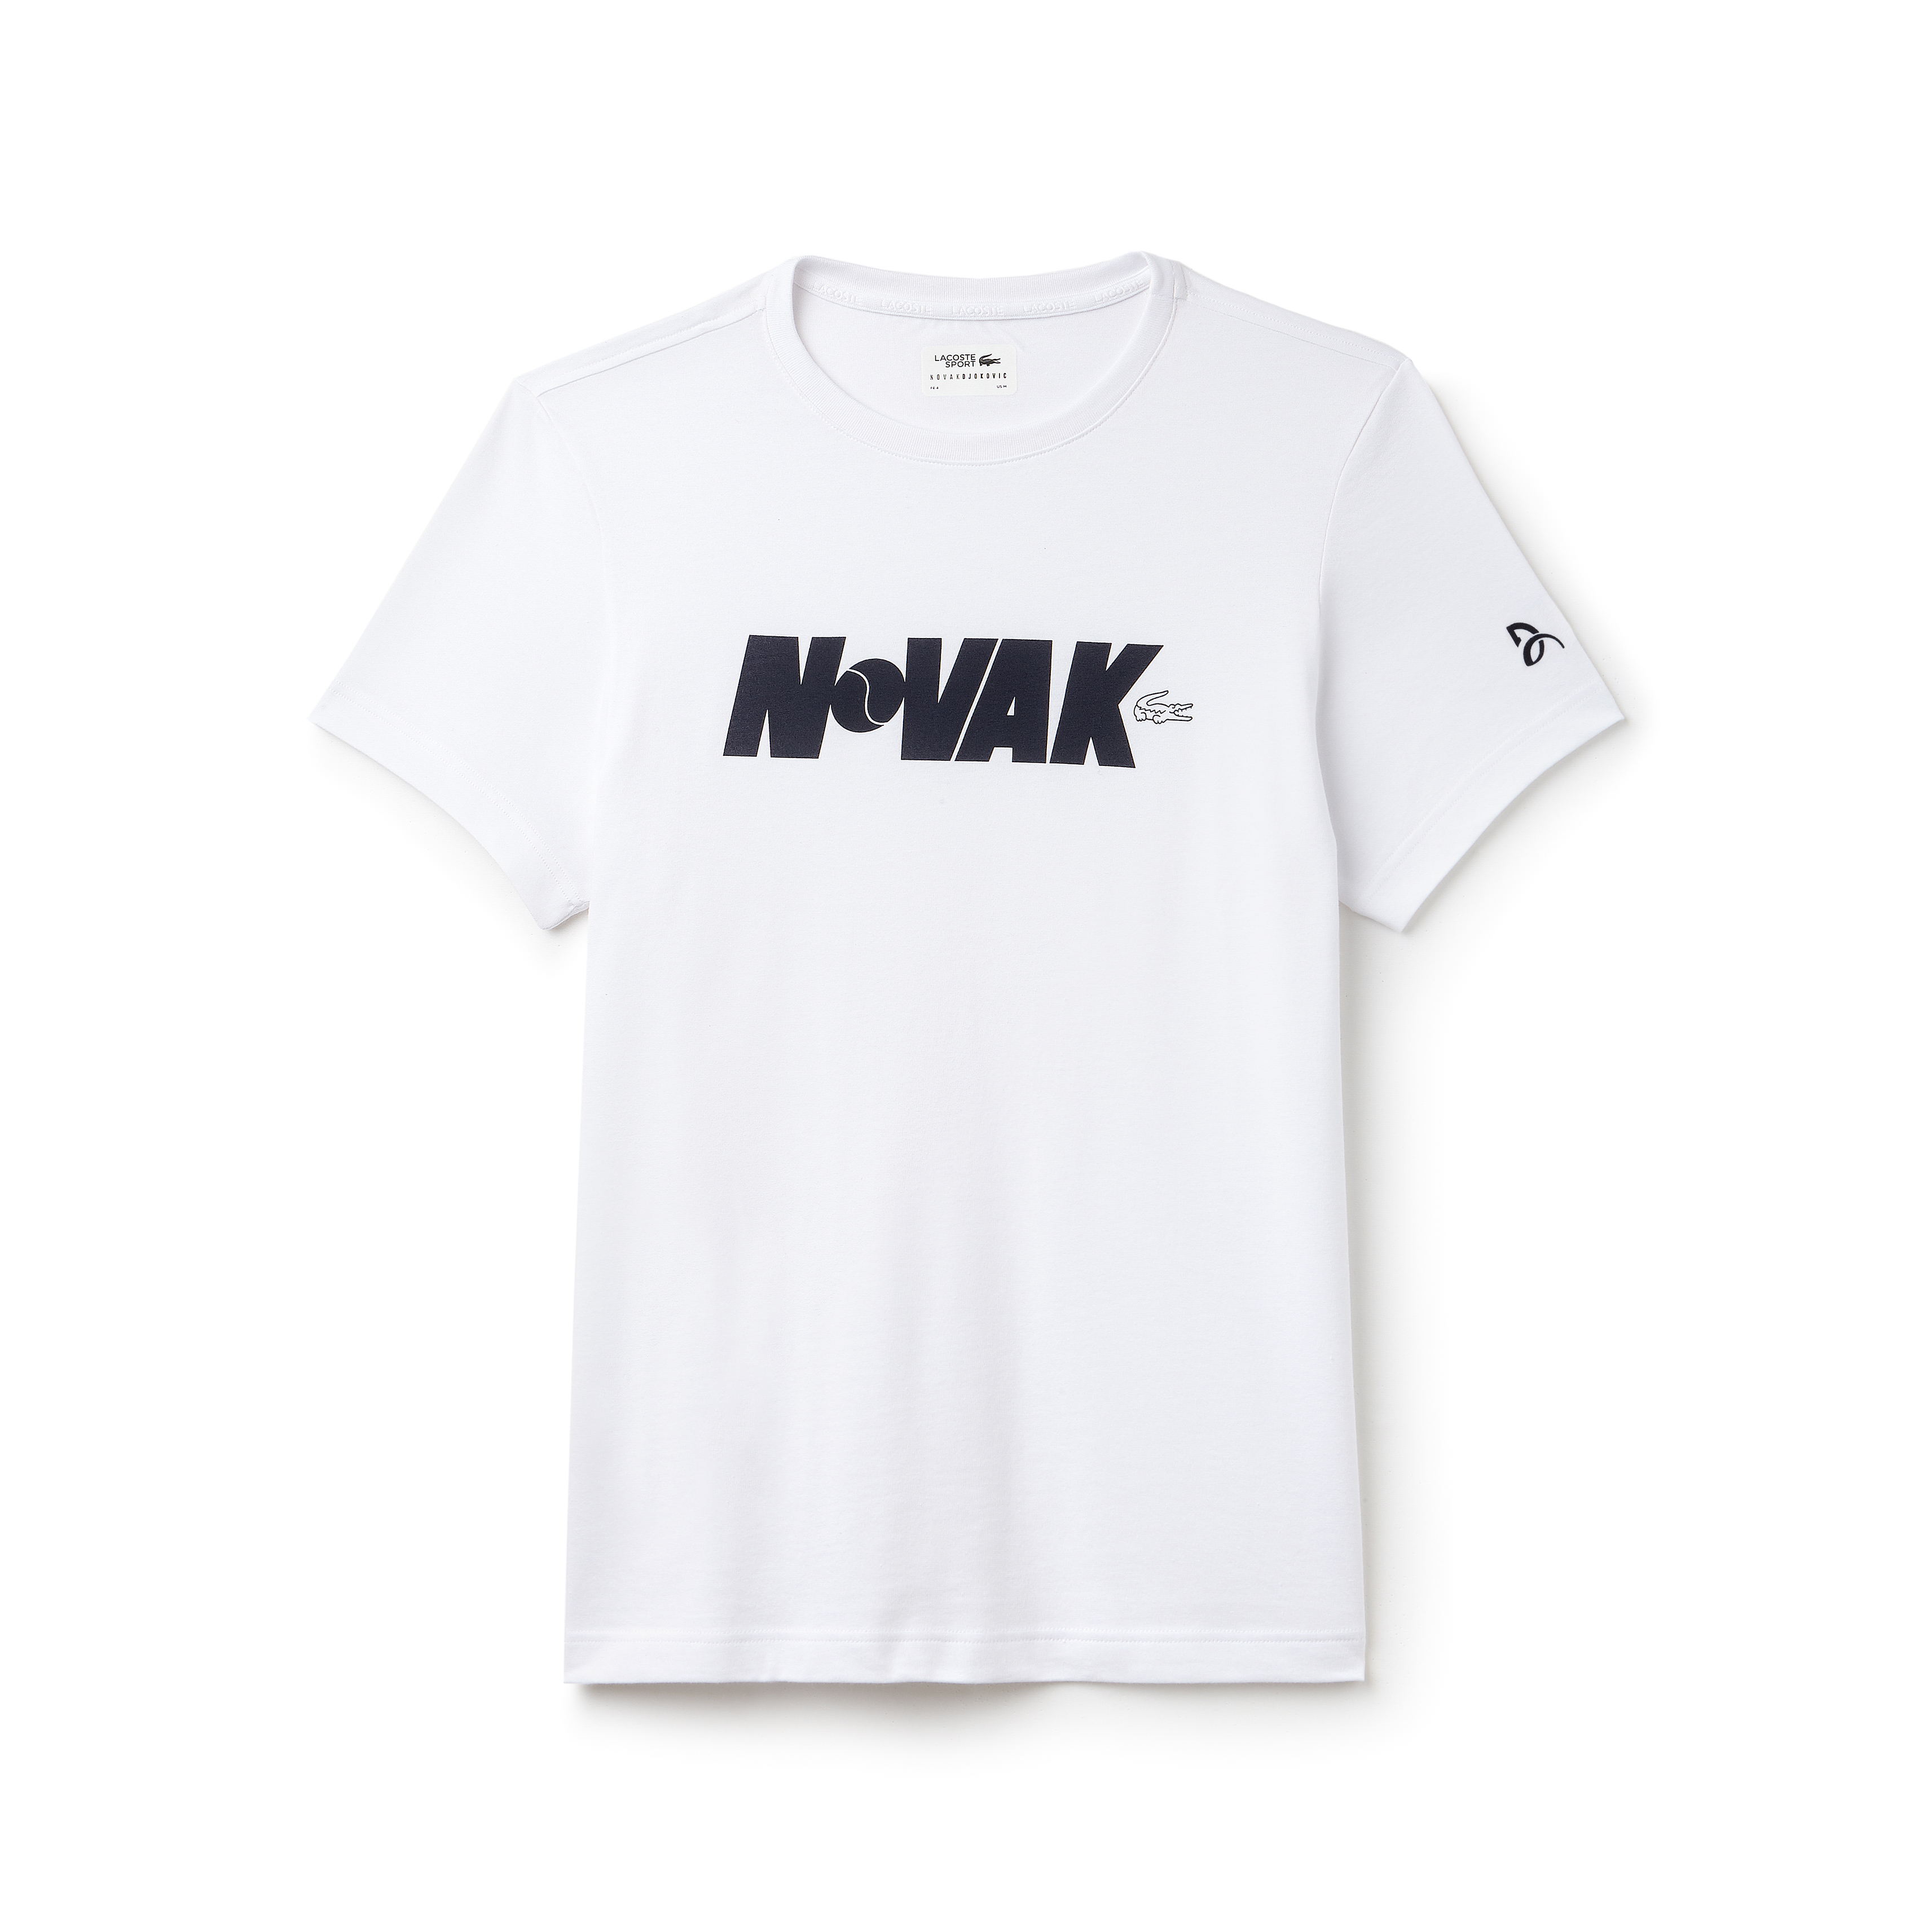 t-shirt-lacoste-novak-djokovic-2018-tenn